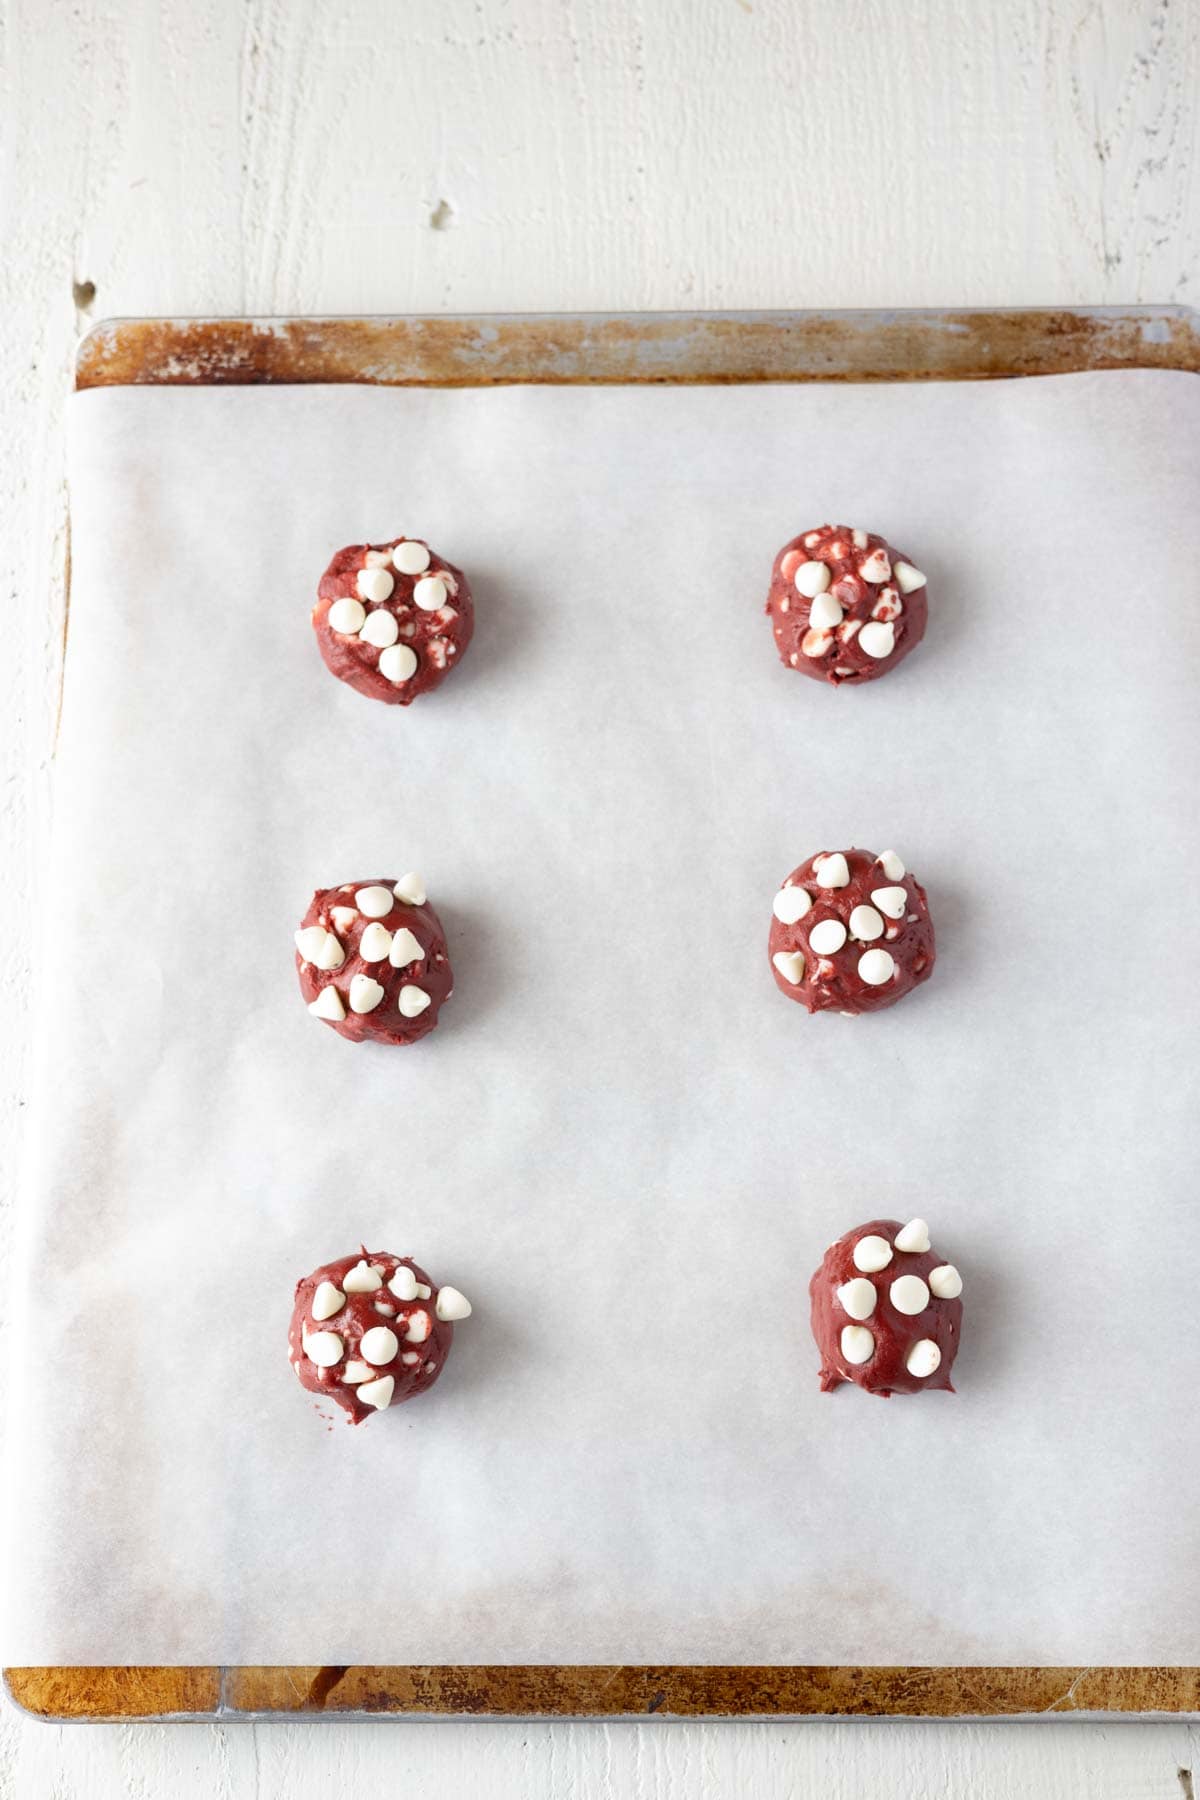 White chocolate chip red velvet cookies on baking sheet.